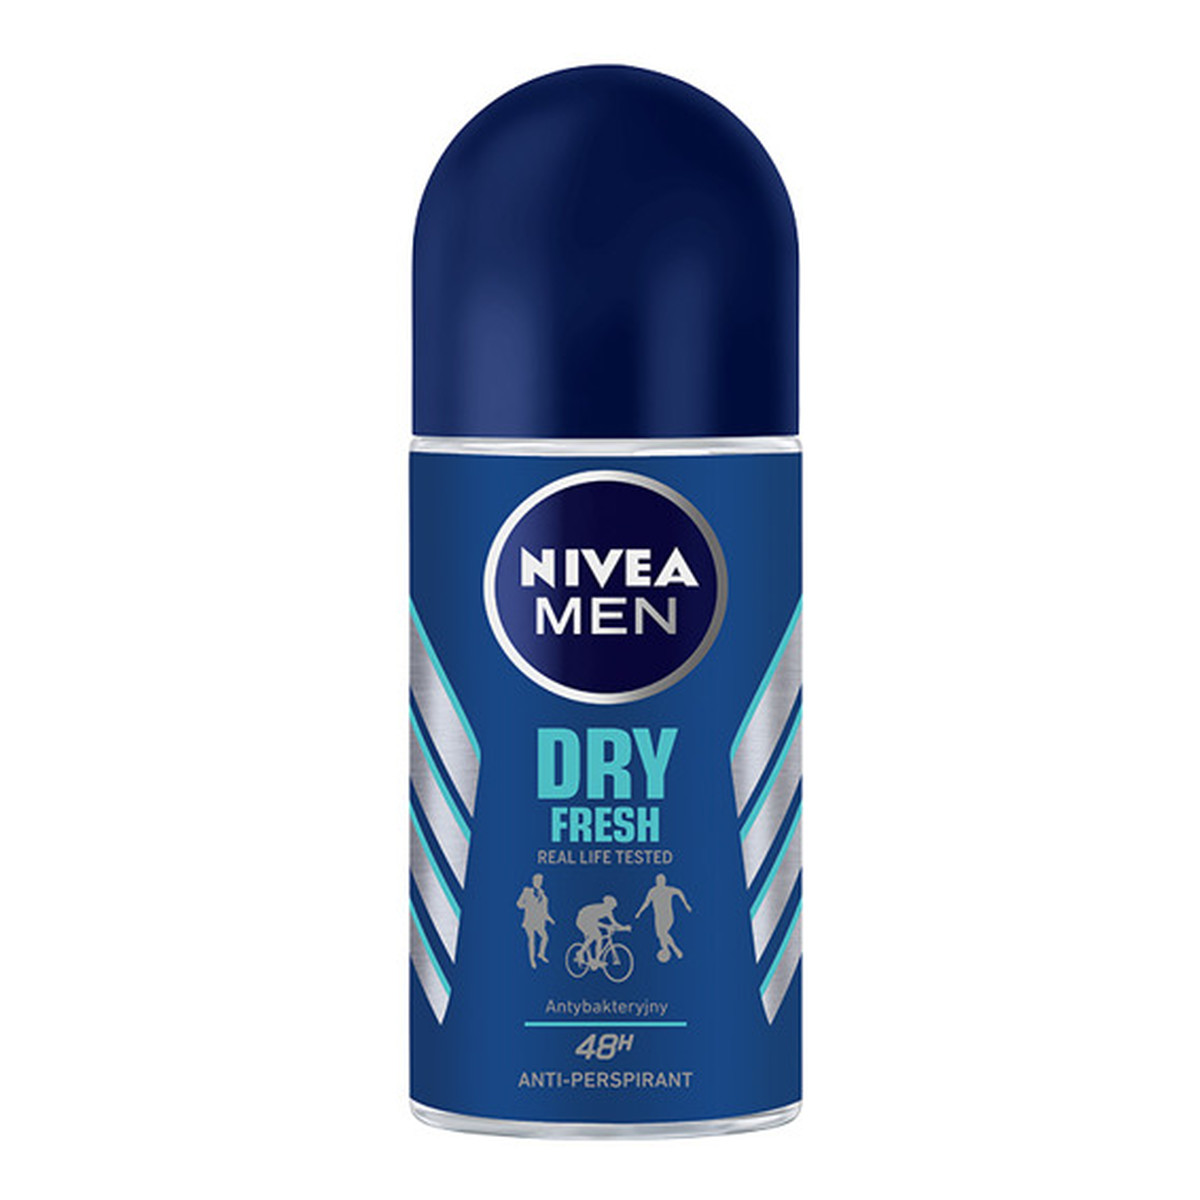 Nivea Nivea Dezodorant DRY FRESH roll-on męski - 0185991 50ml